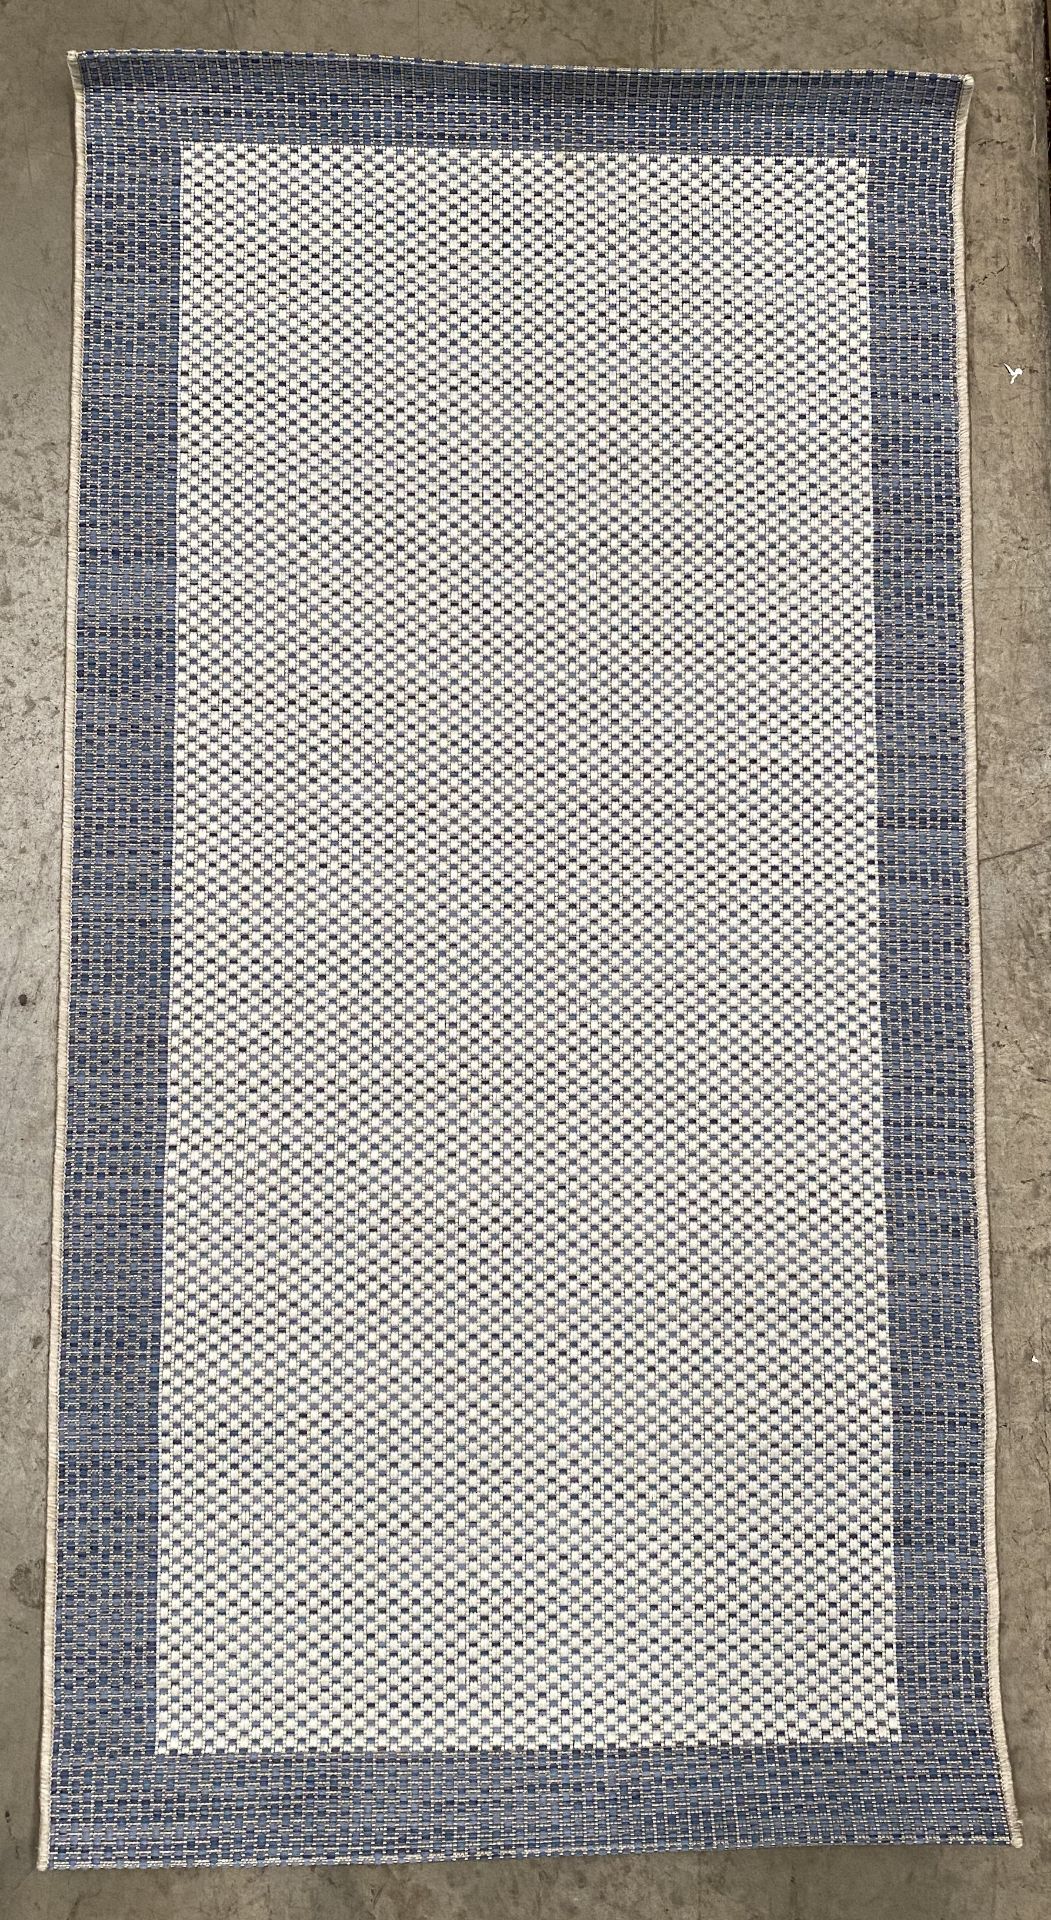 A premium flatweave blue and beige patterned rug - 150cm x 75cm